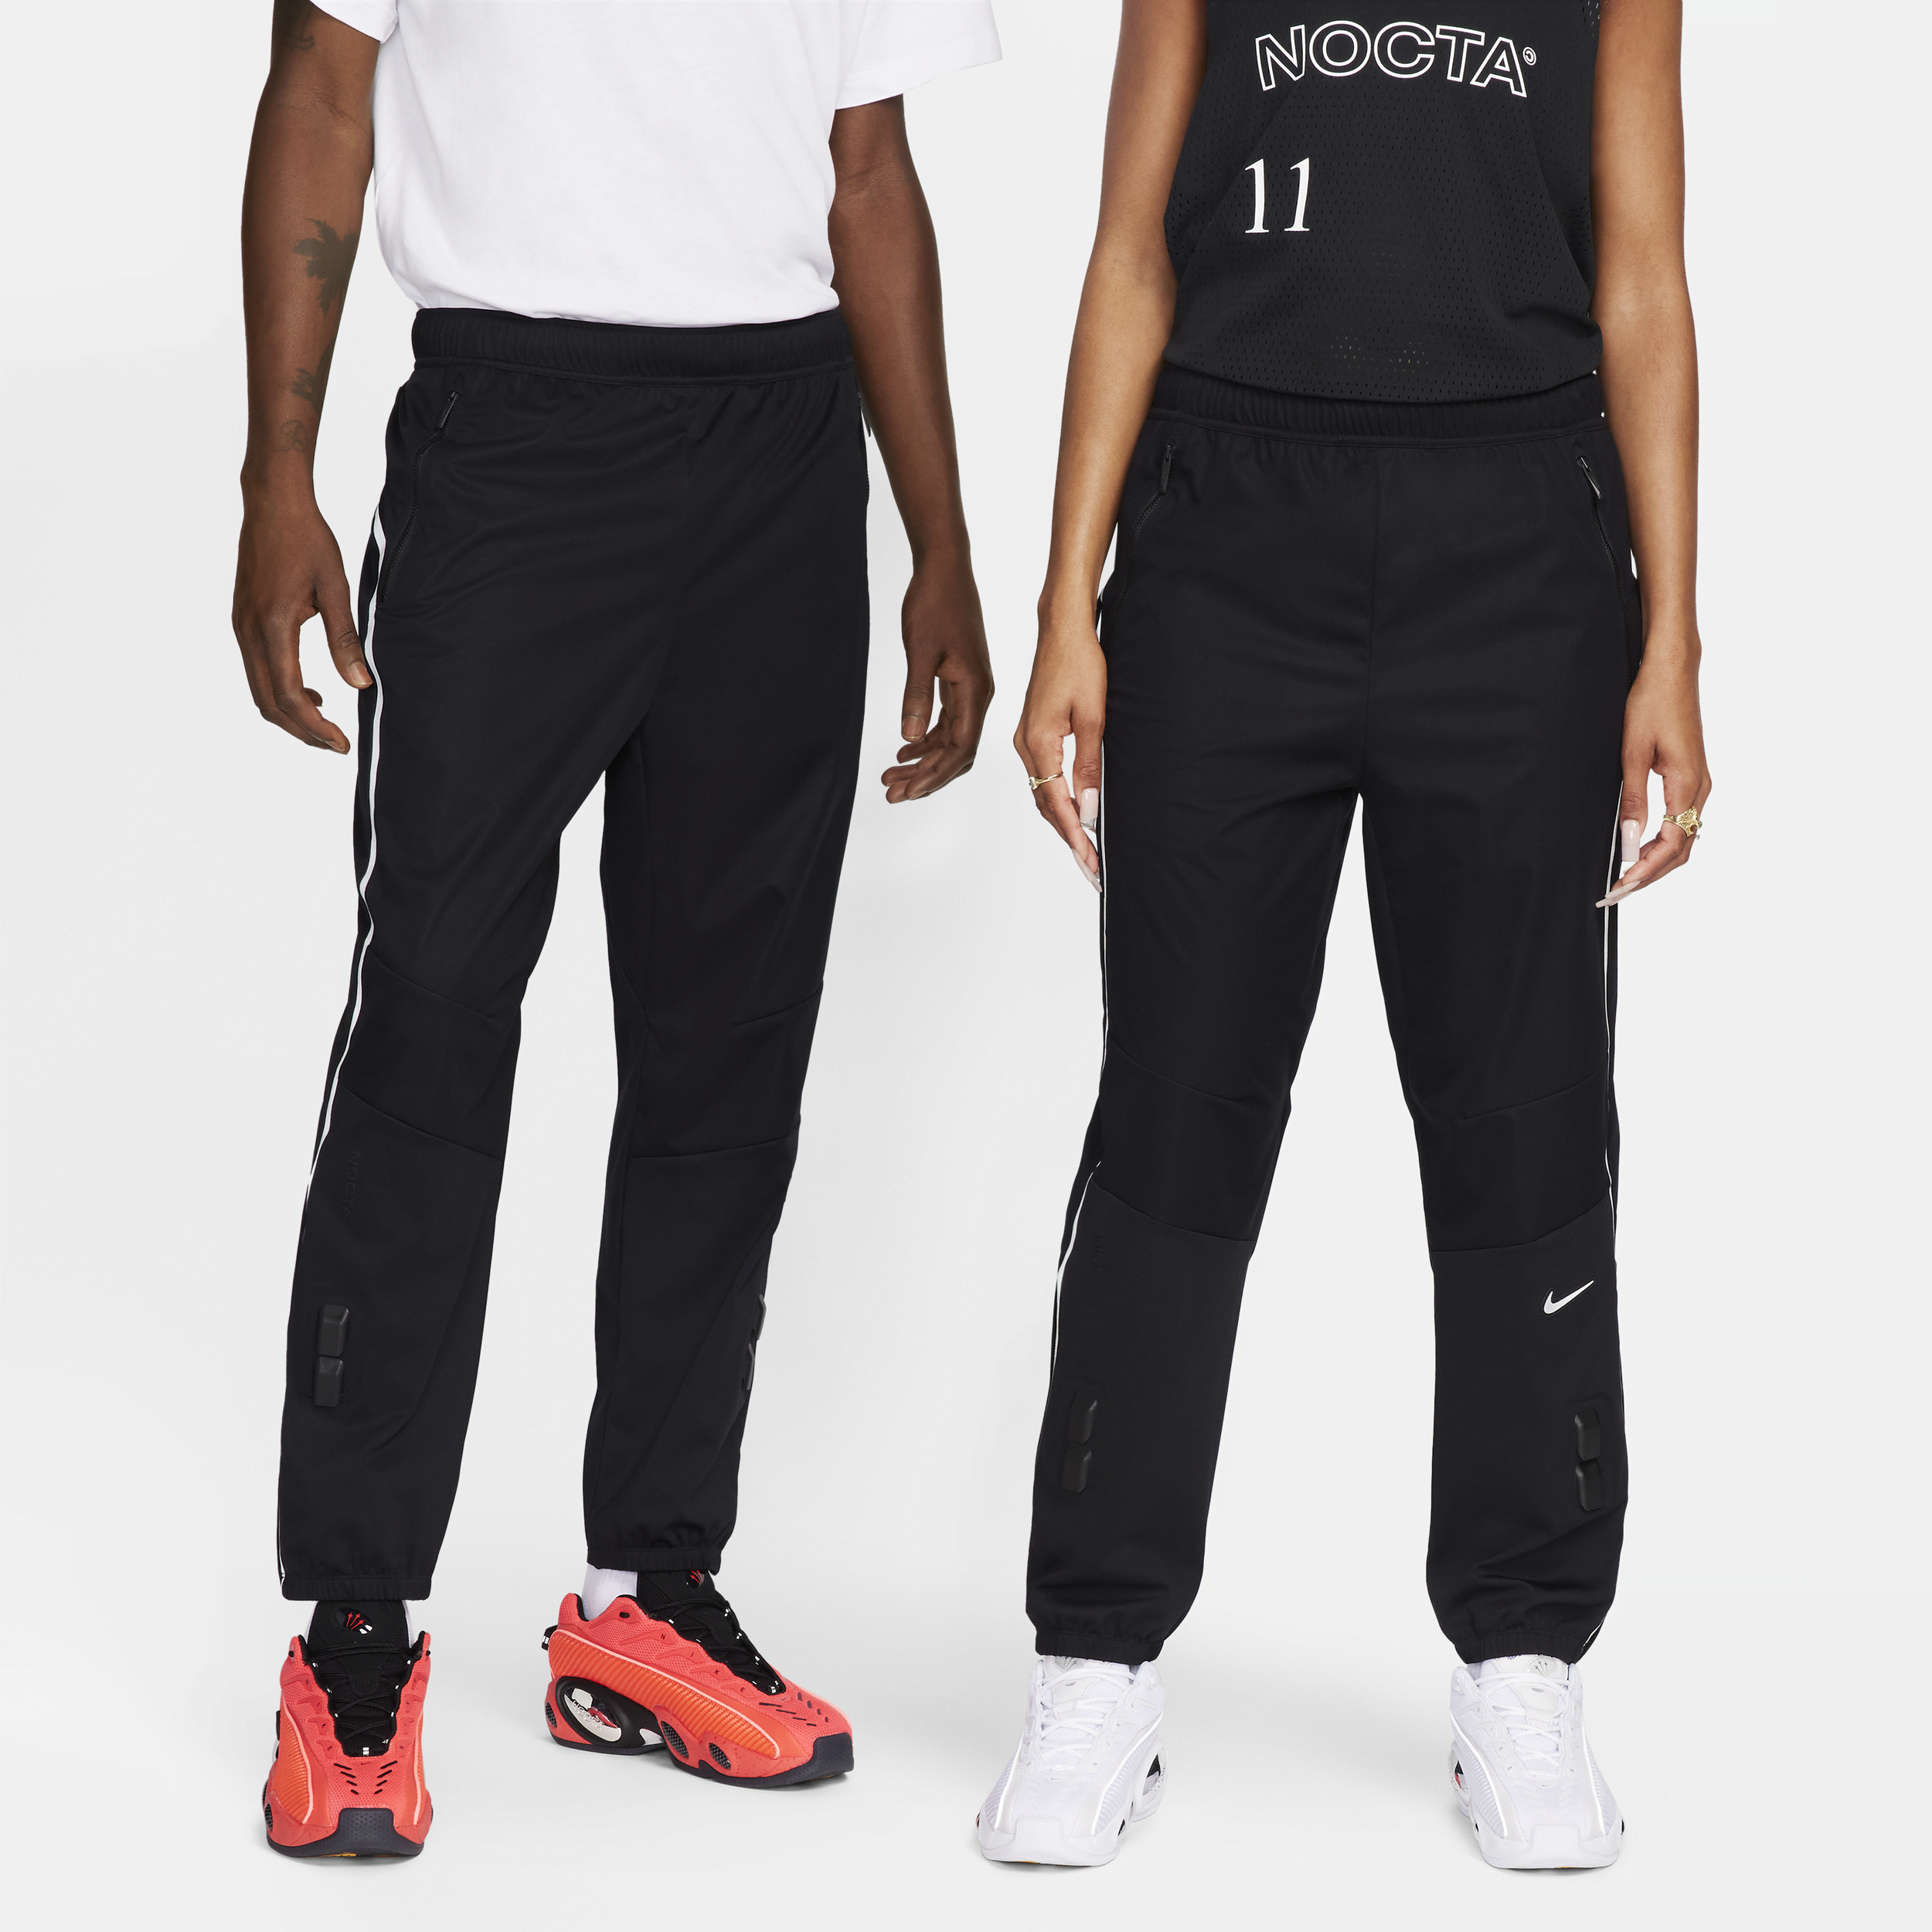 Nike Pantaloni da riscaldamento NOCTA – Uomo - Nero